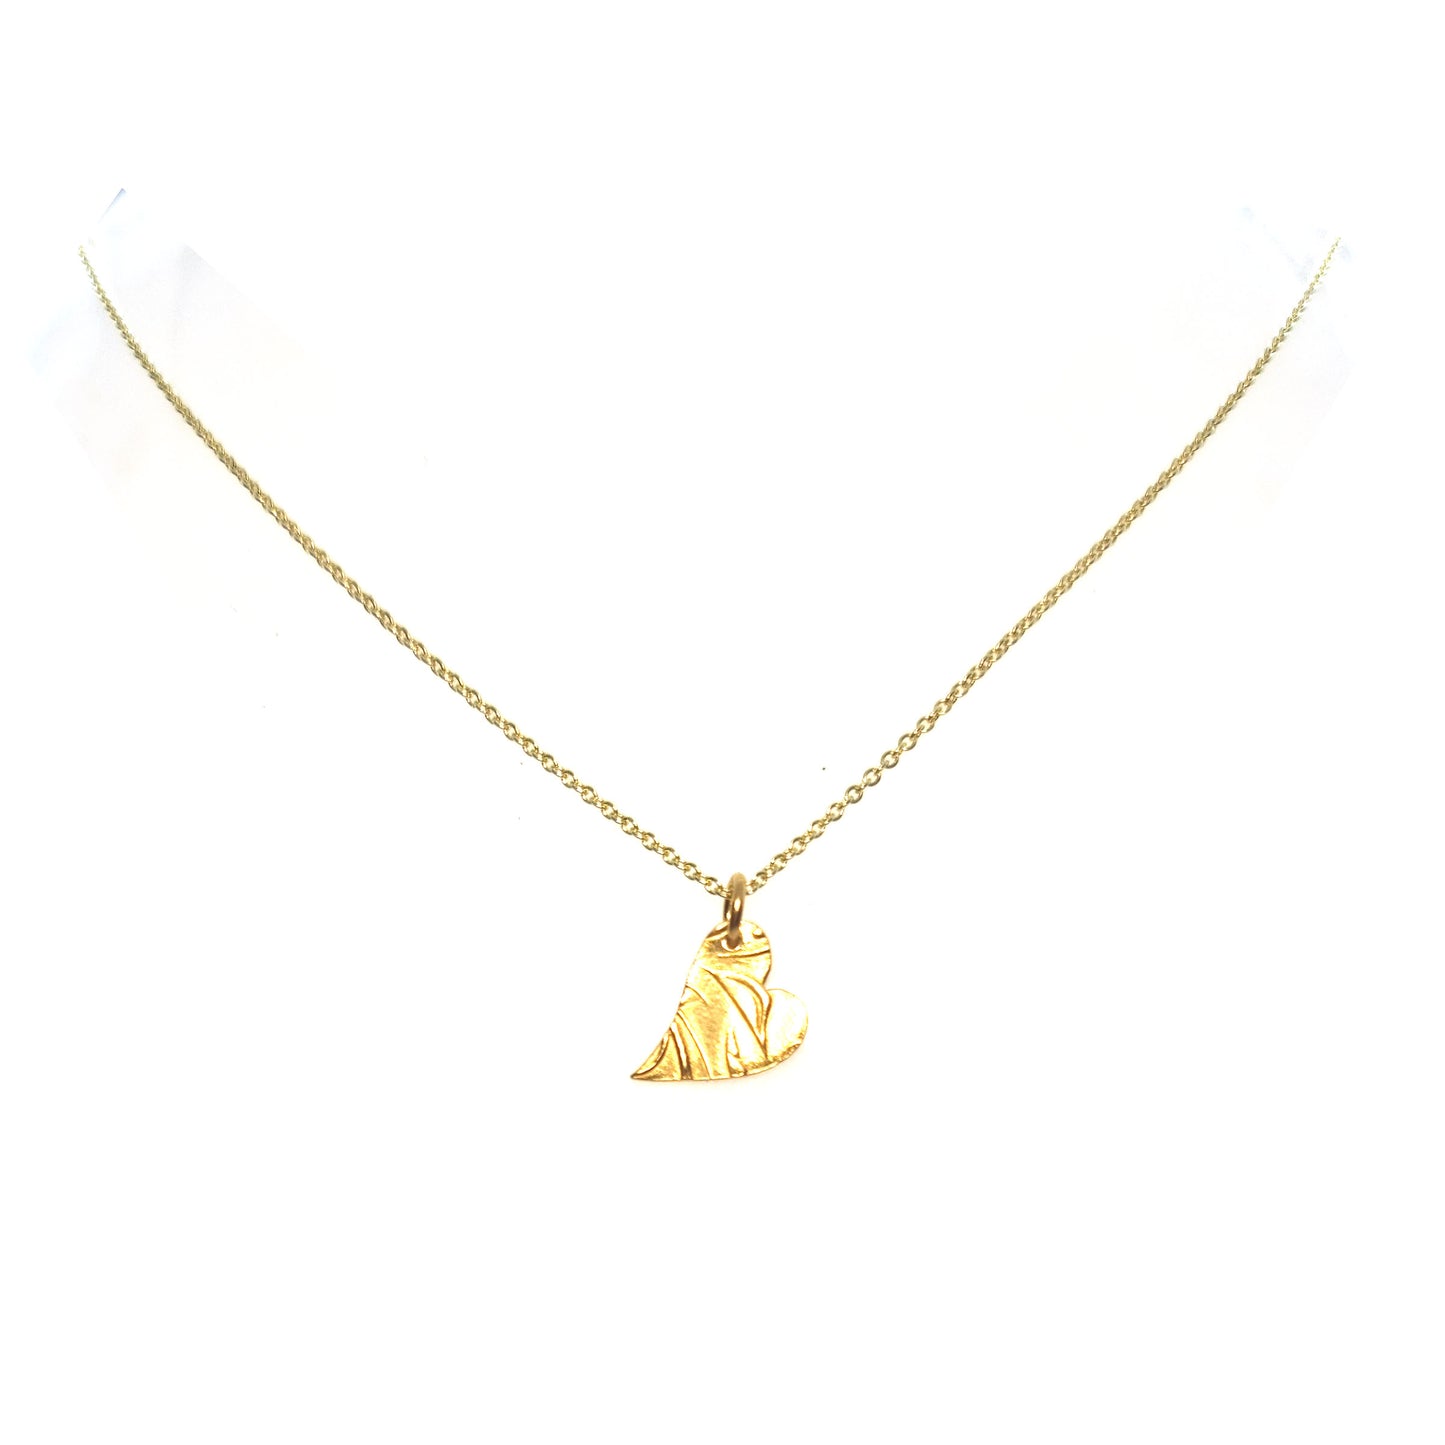 Yellow gold vermeil asymmetrical heart pendant with a leaf & vine design on a yellow gold vermeil chain.